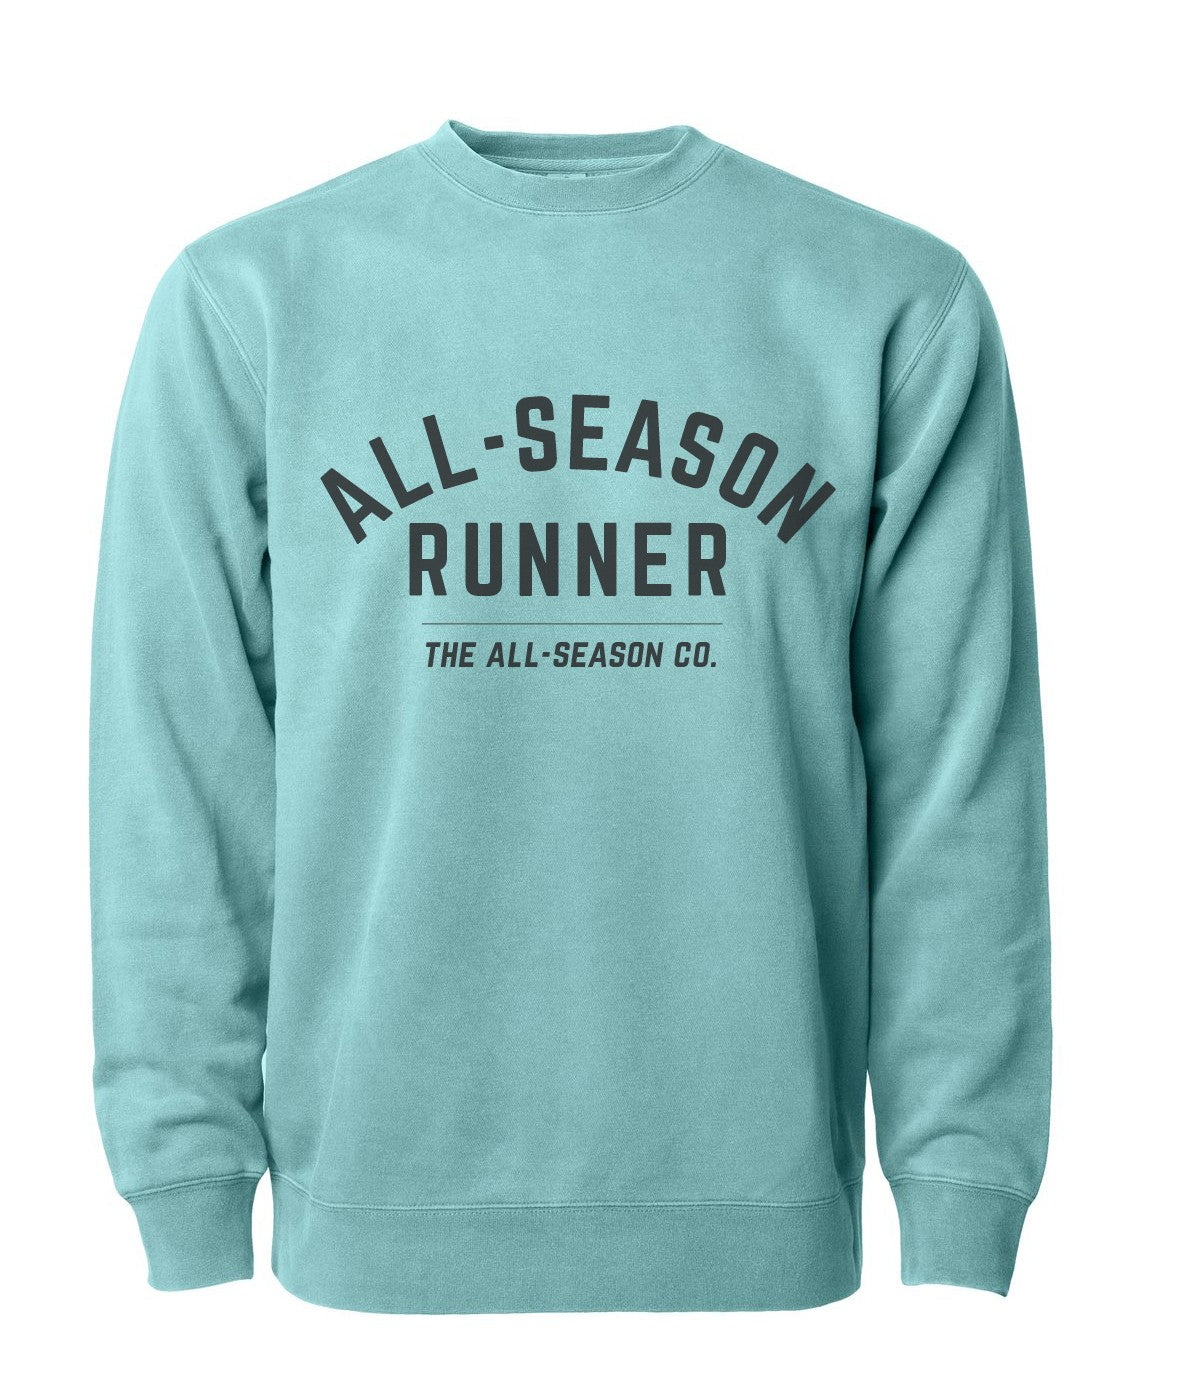 All-Season Runner: Unisex Crewneck Sweatshirt in Mint Blue Apliiq